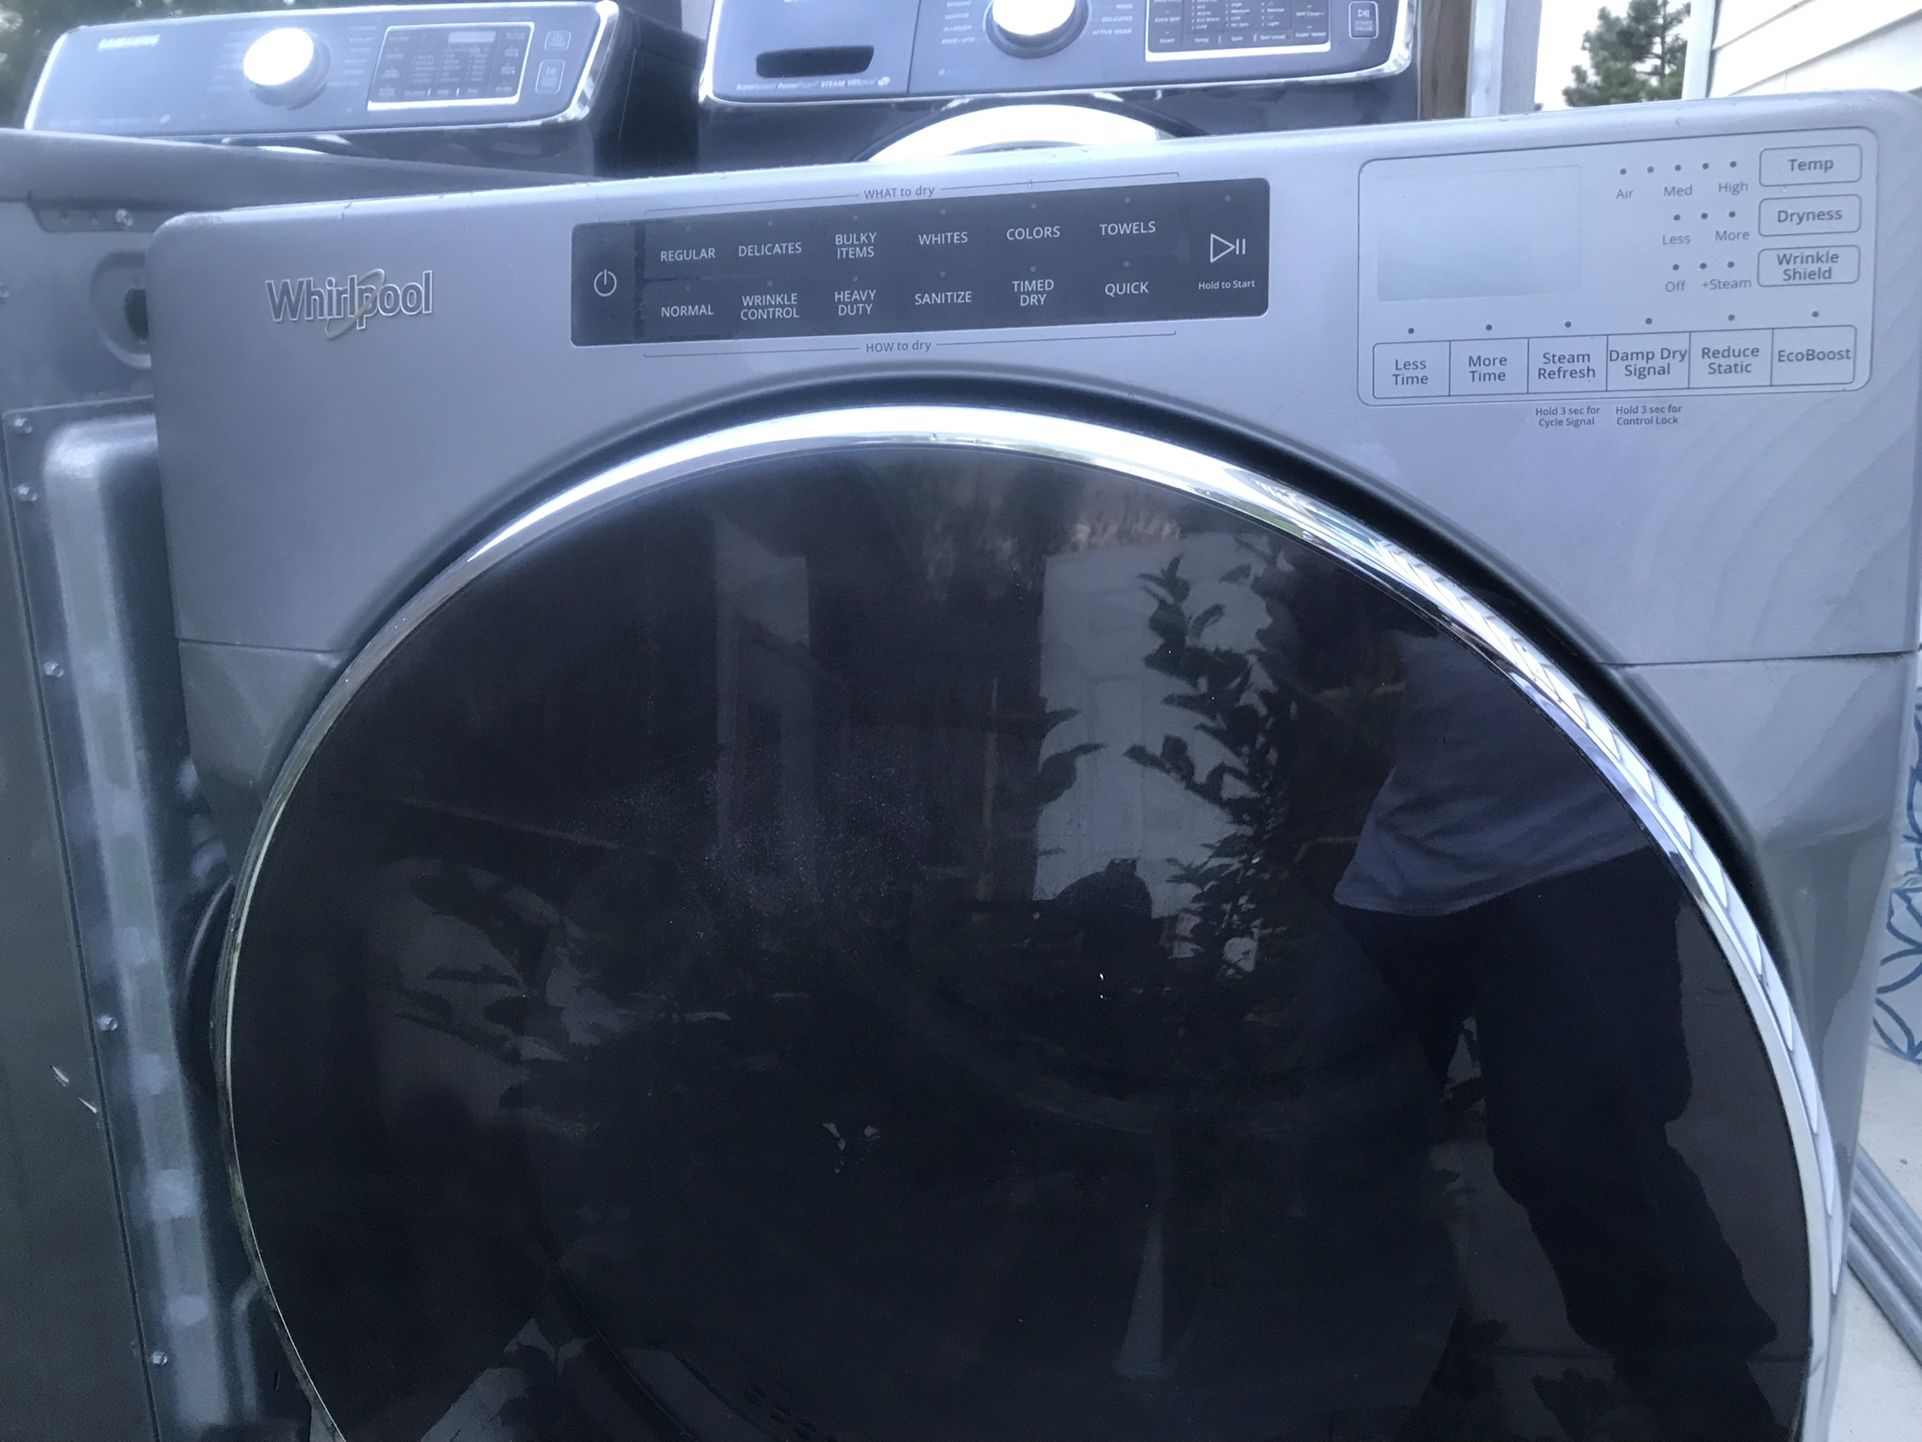 Whirlpool Dryer & Washer Set